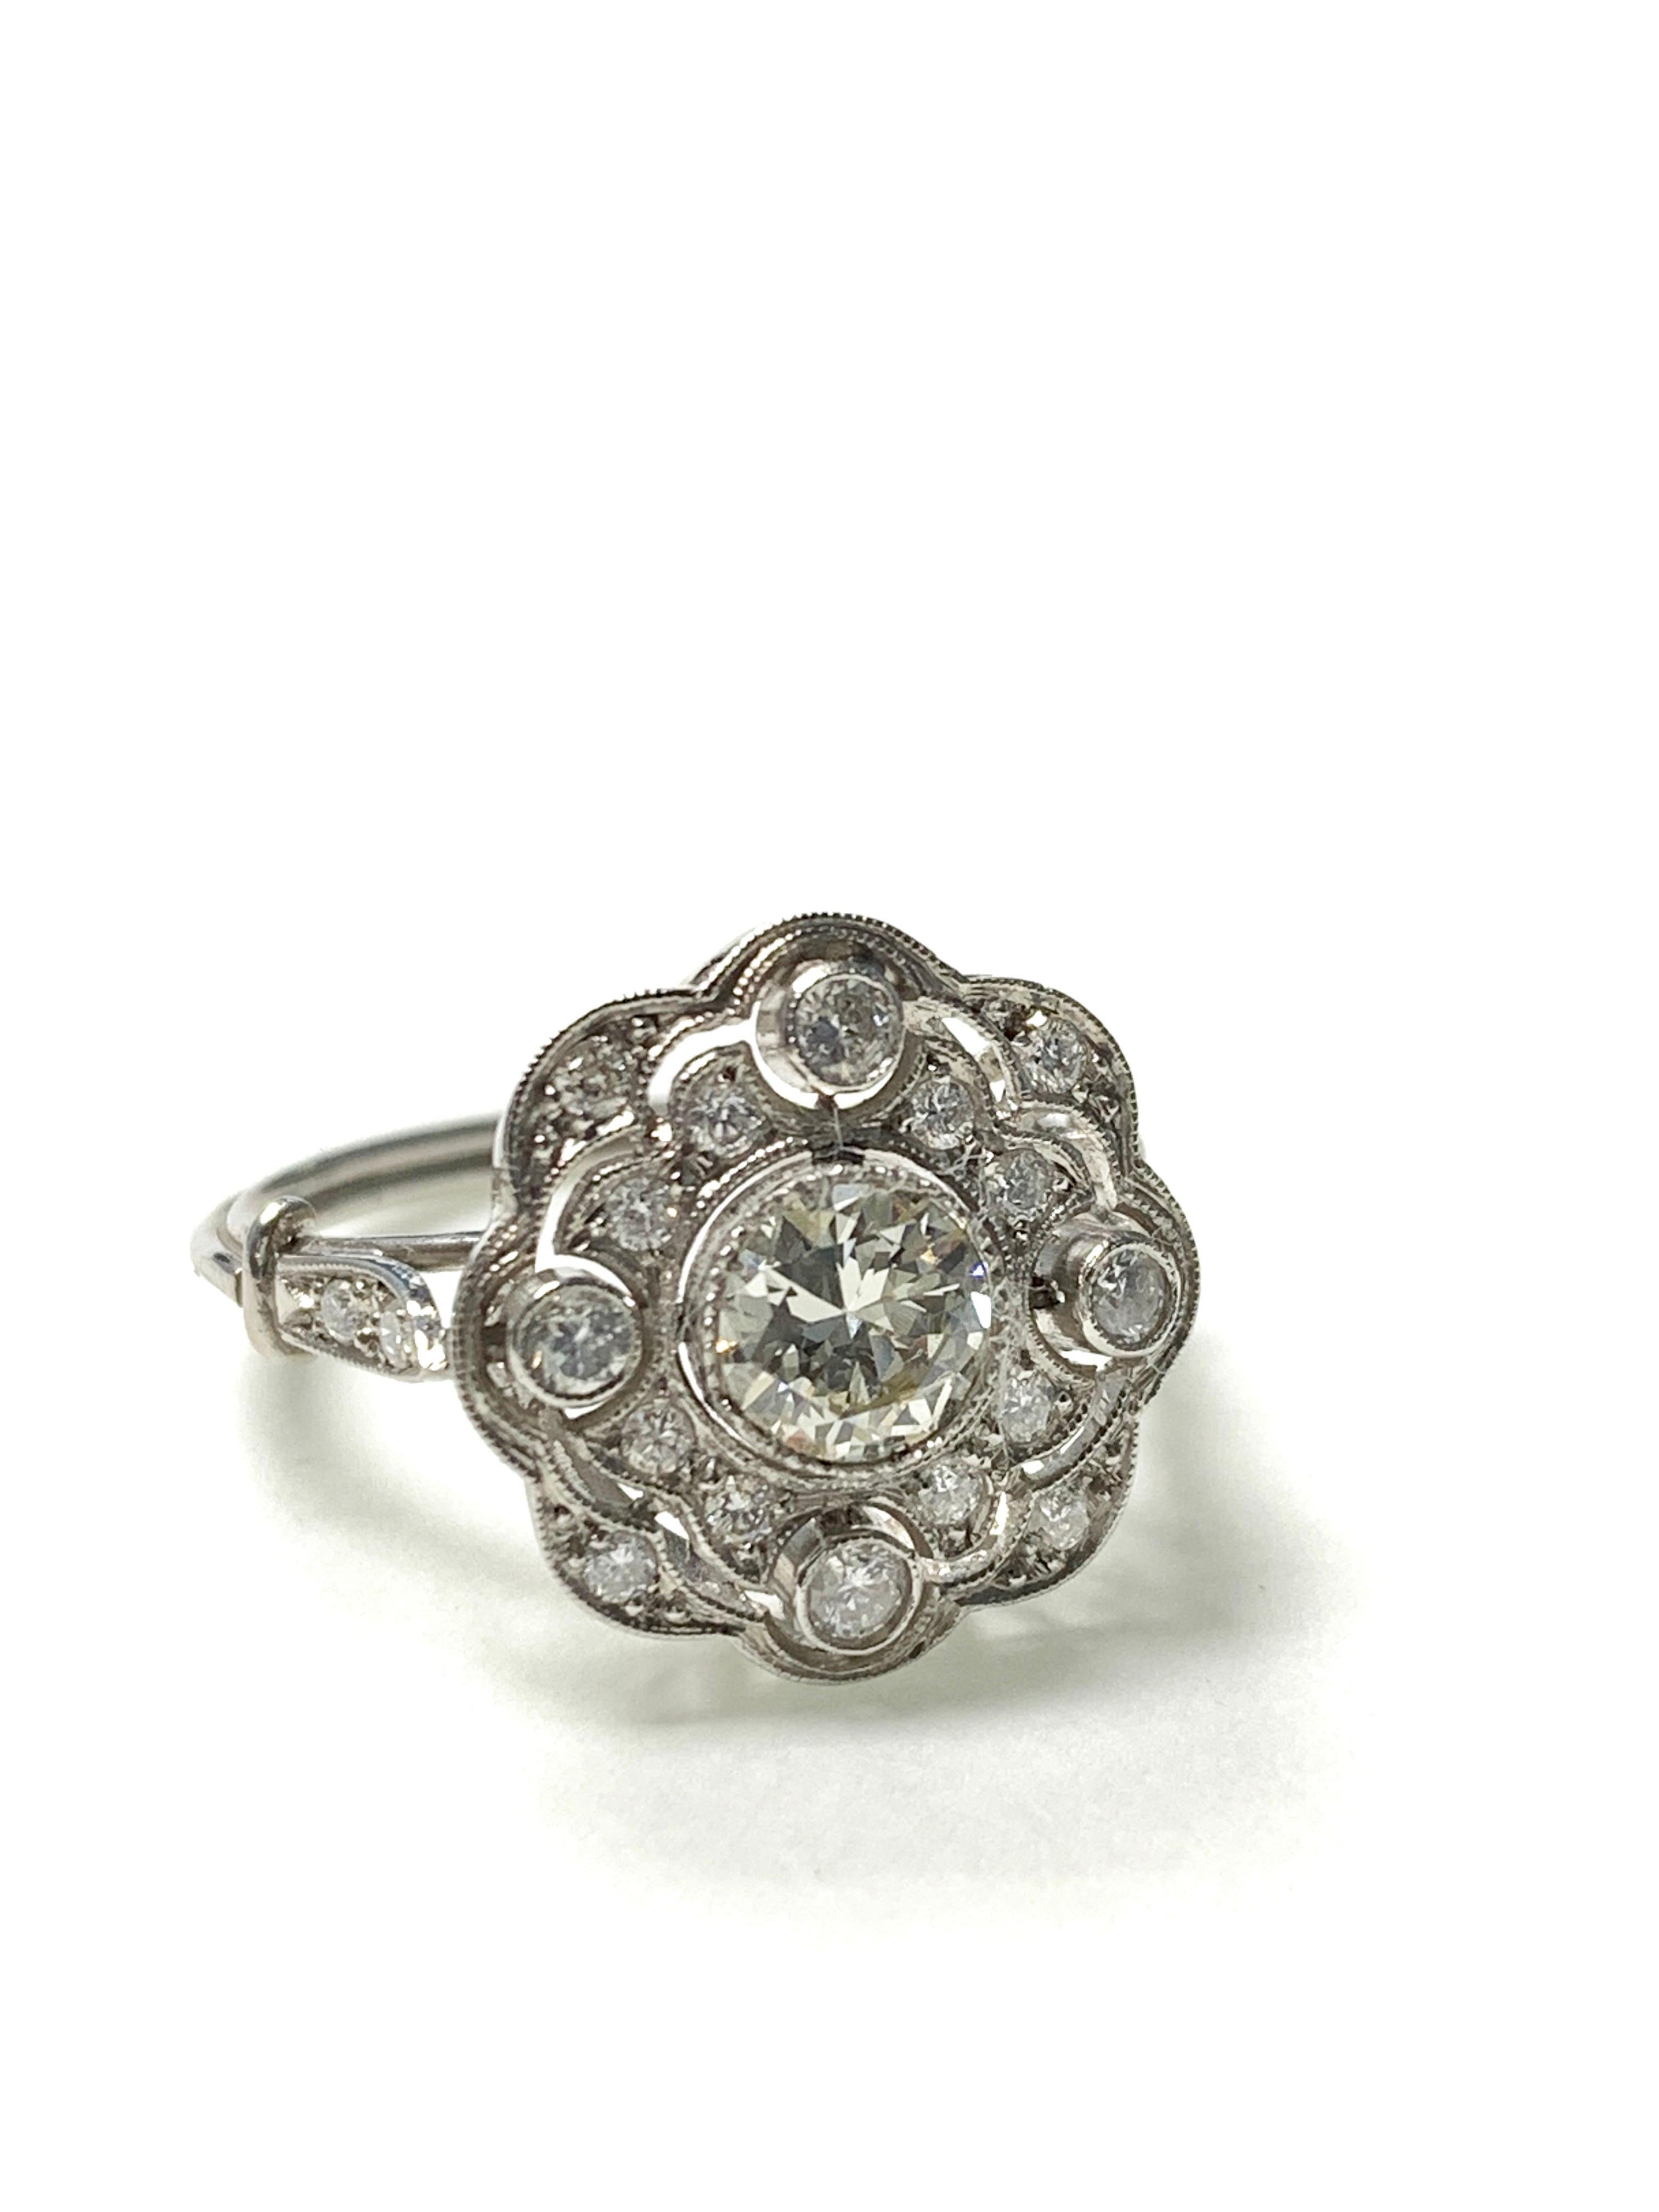 Old European Cut Diamond Engagement Ring in Platinum For Sale 2